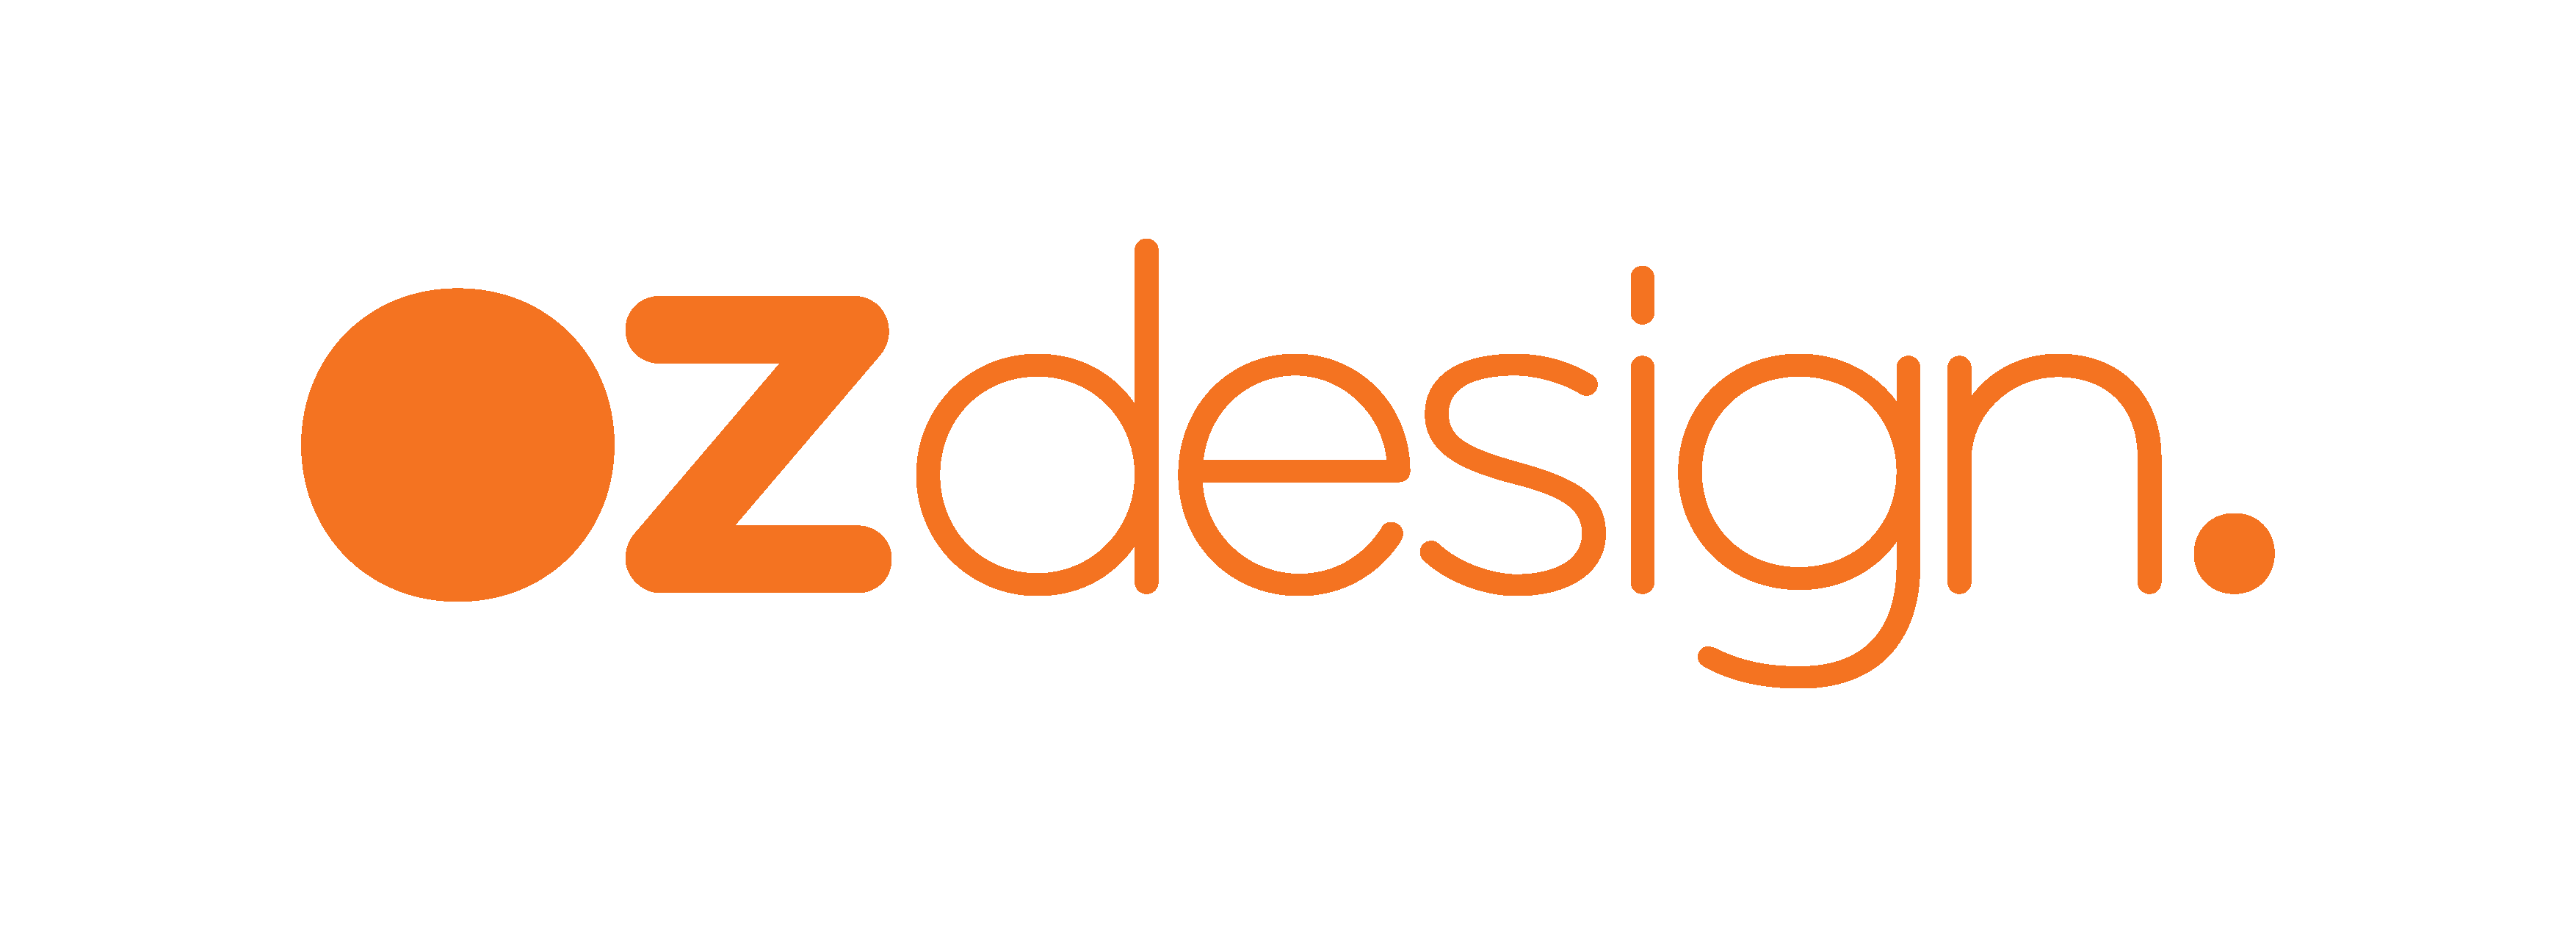 OZD_Logo_Primary